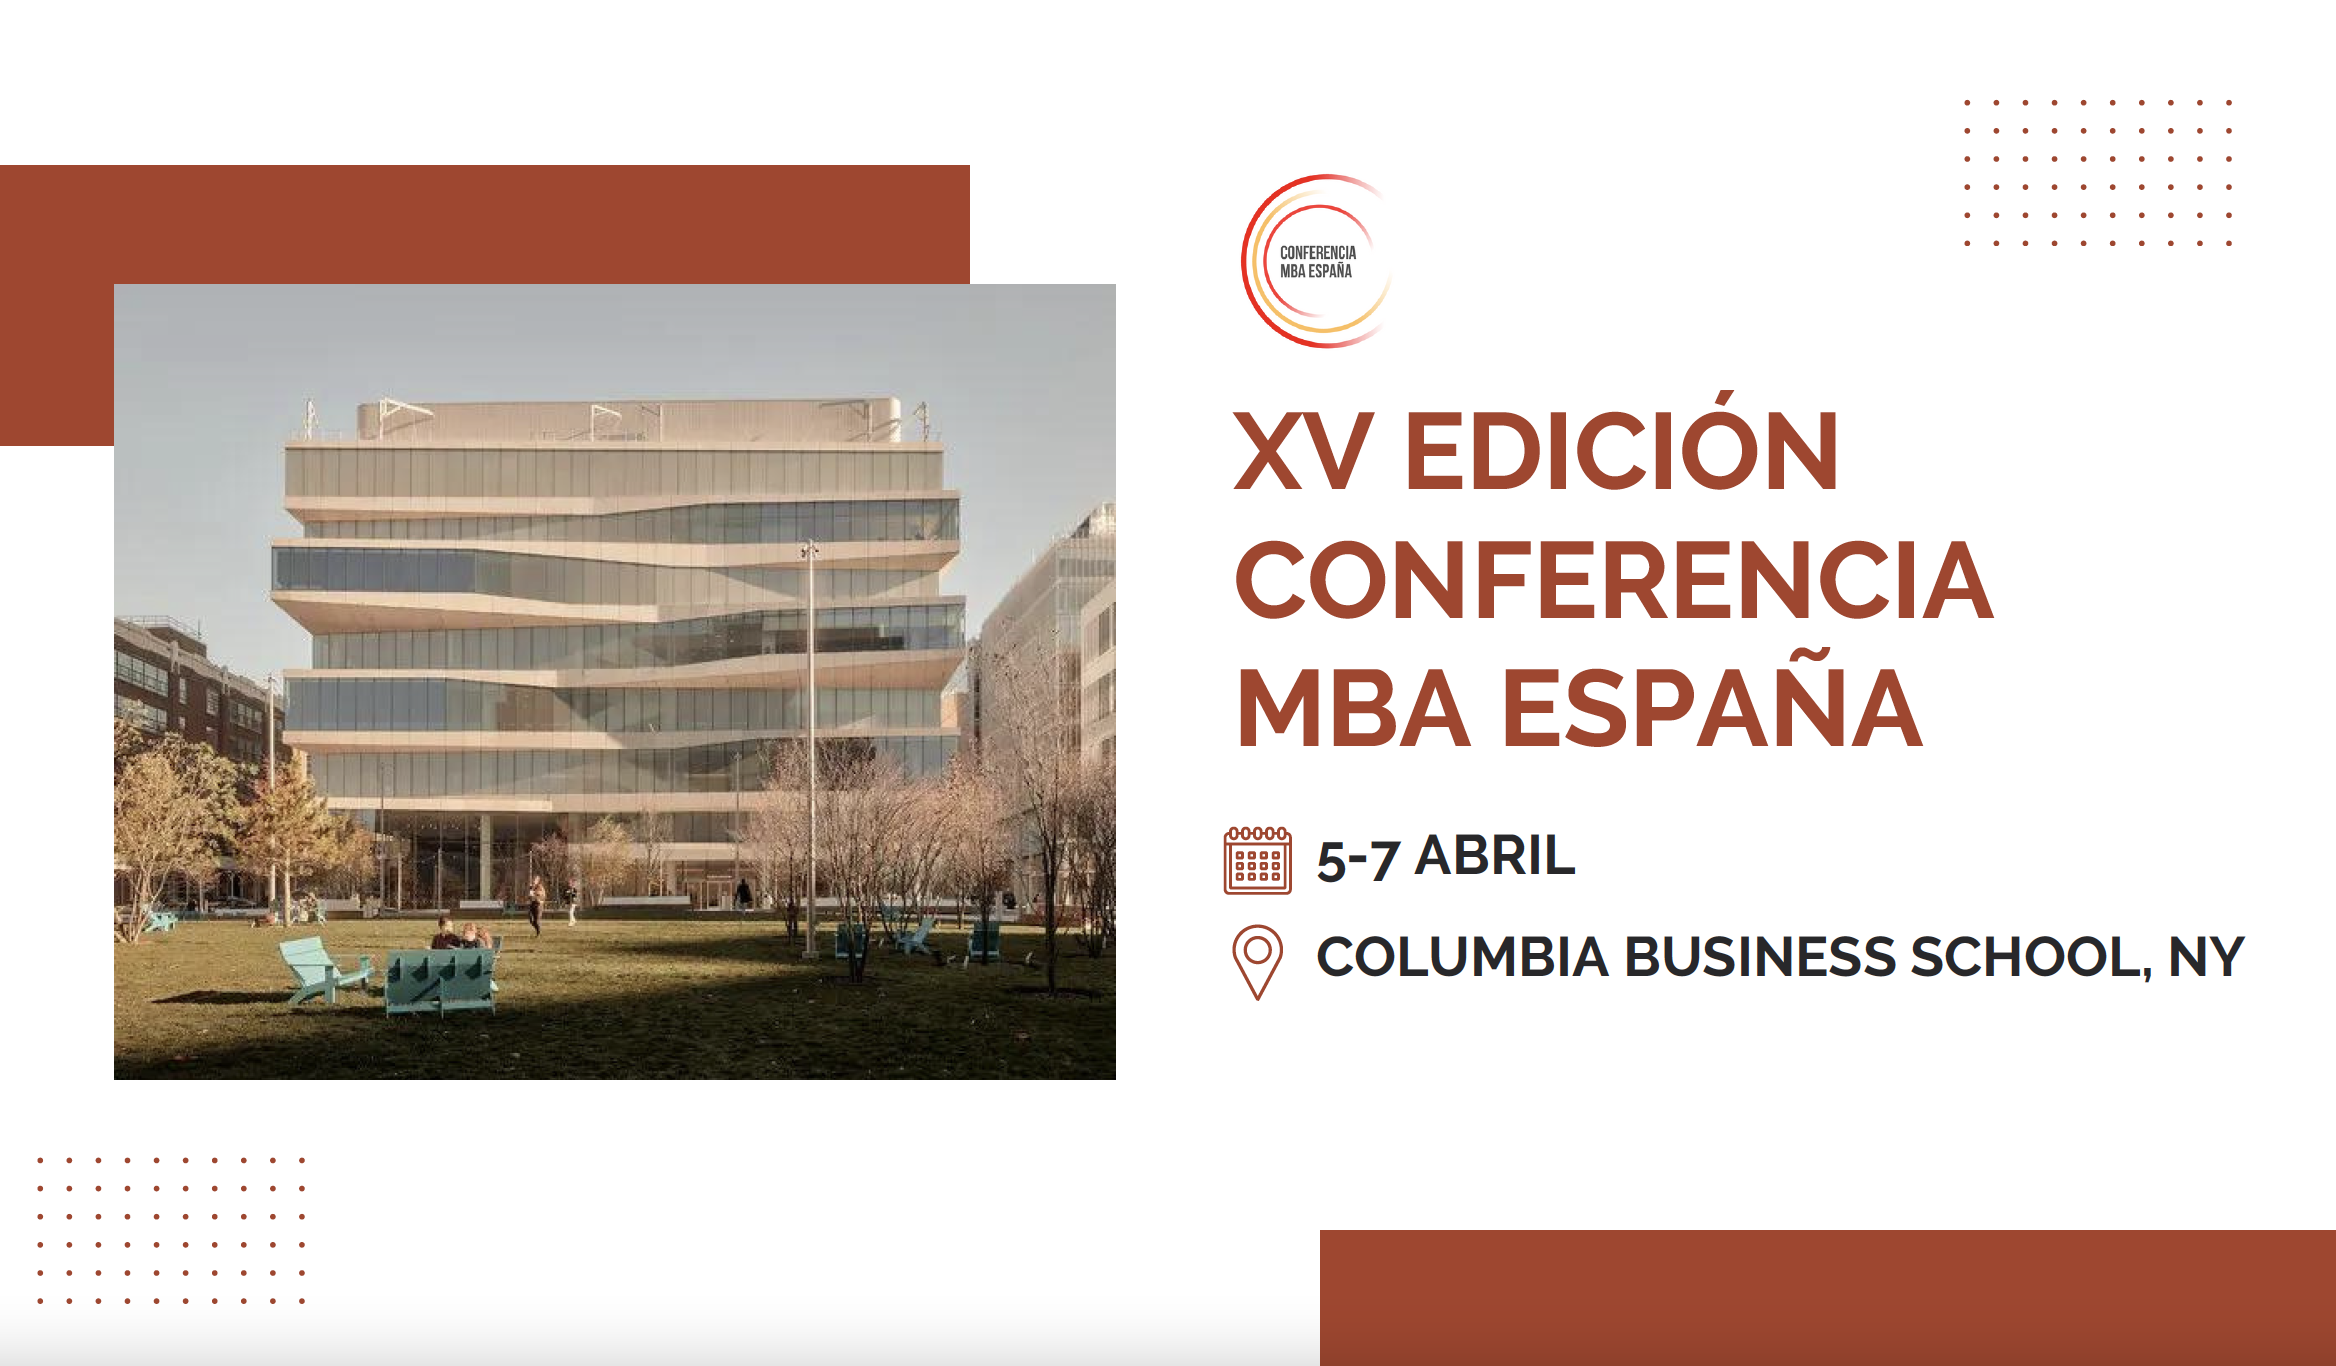 15th Edition of Conferencia MBA España